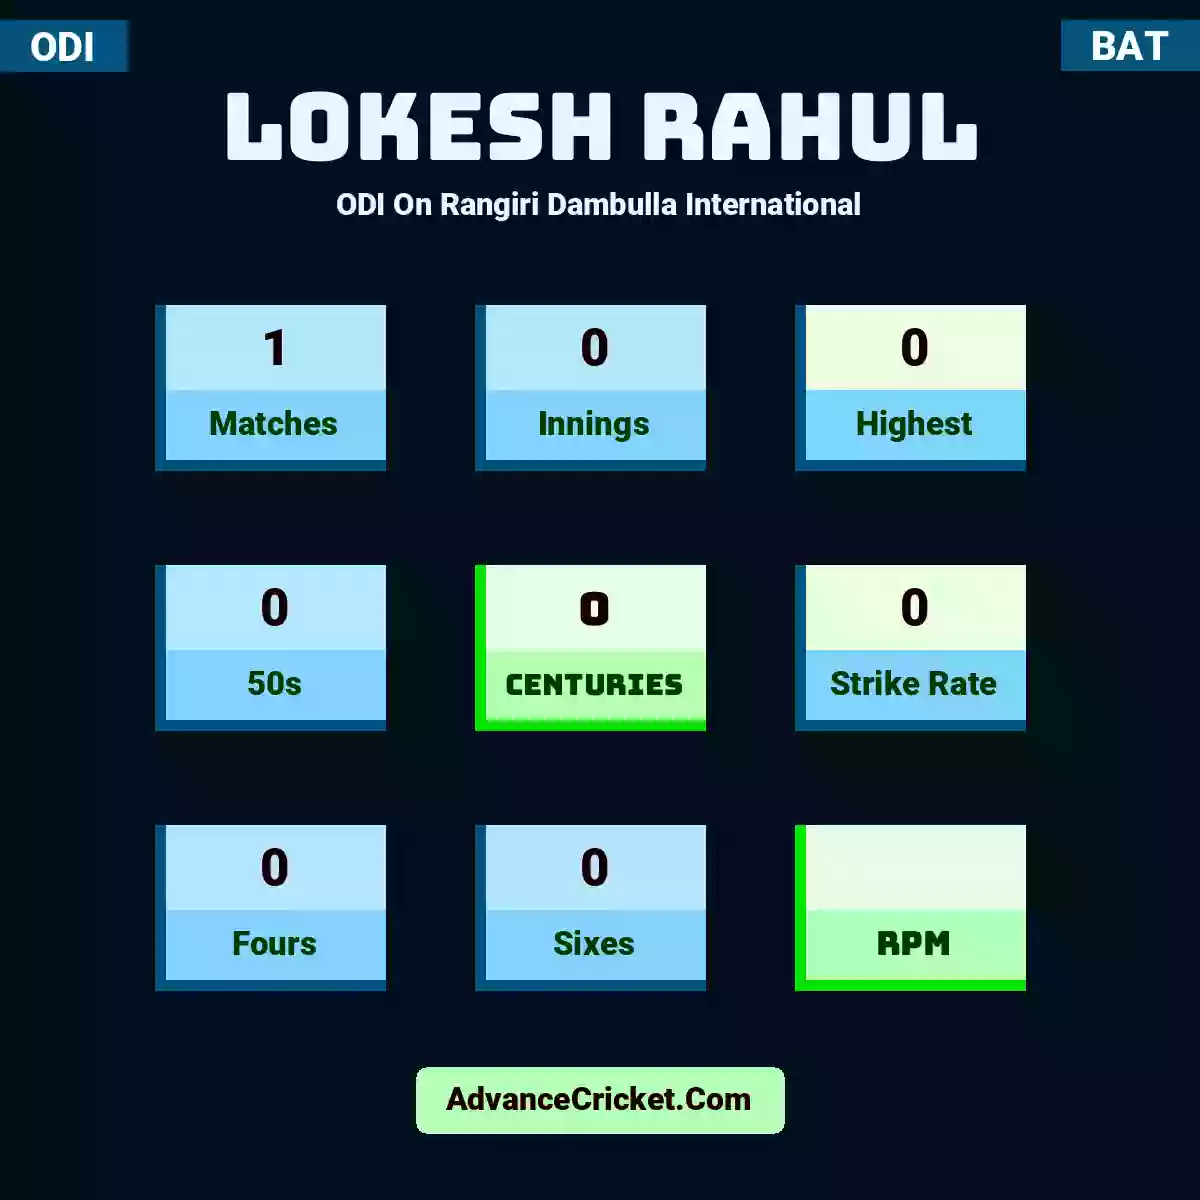 Lokesh Rahul ODI  On Rangiri Dambulla International, Lokesh Rahul played 1 matches, scored 0 runs as highest, 0 half-centuries, and 0 centuries, with a strike rate of 0. KL.Rahul hit 0 fours and 0 sixes.